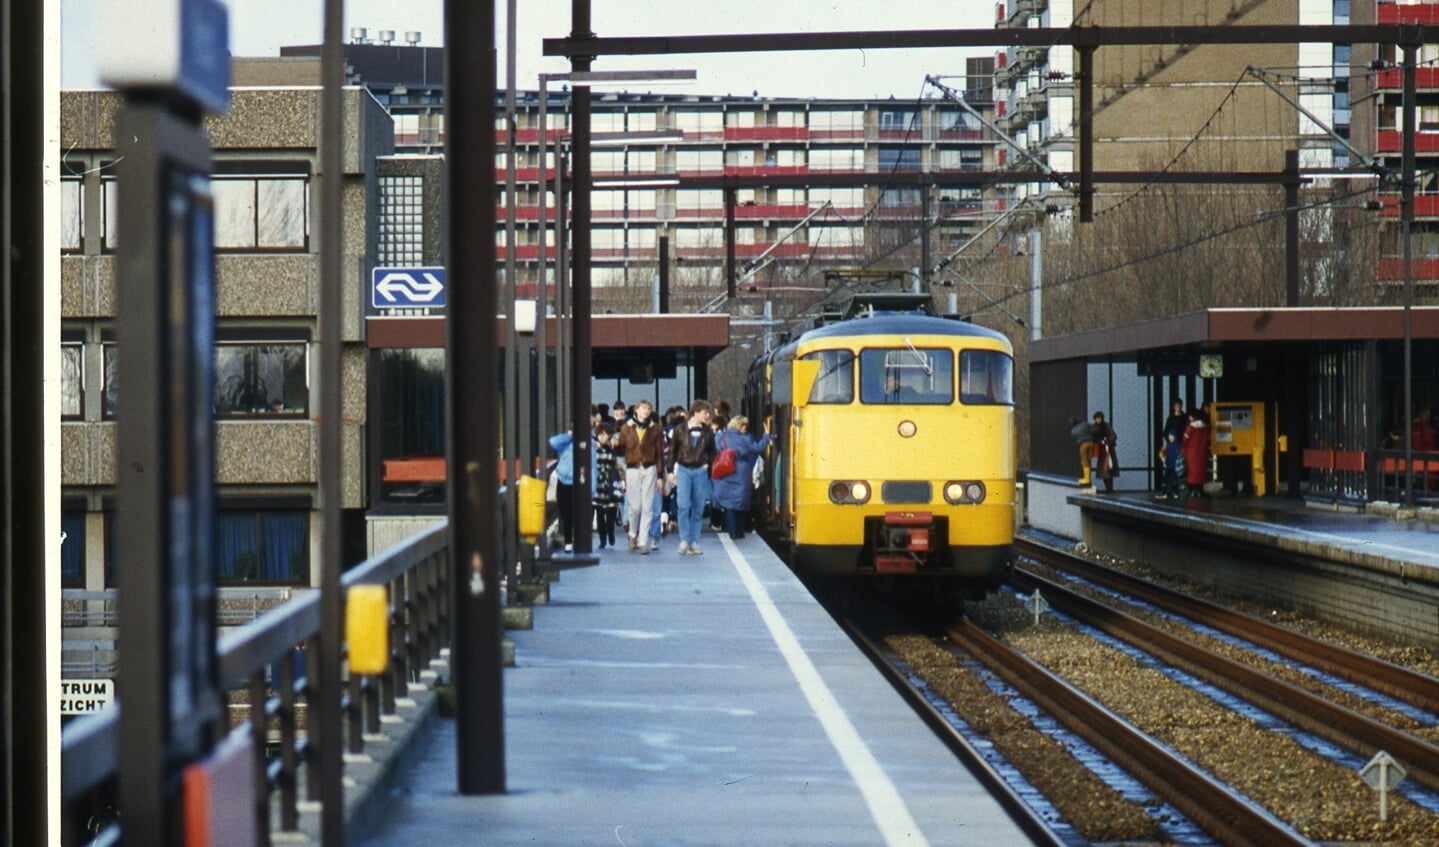 Station Meerzicht met de sprinter omstreeks 1980. Foto: Mieke Kaashoek, Beeldbank Zoetermeer 